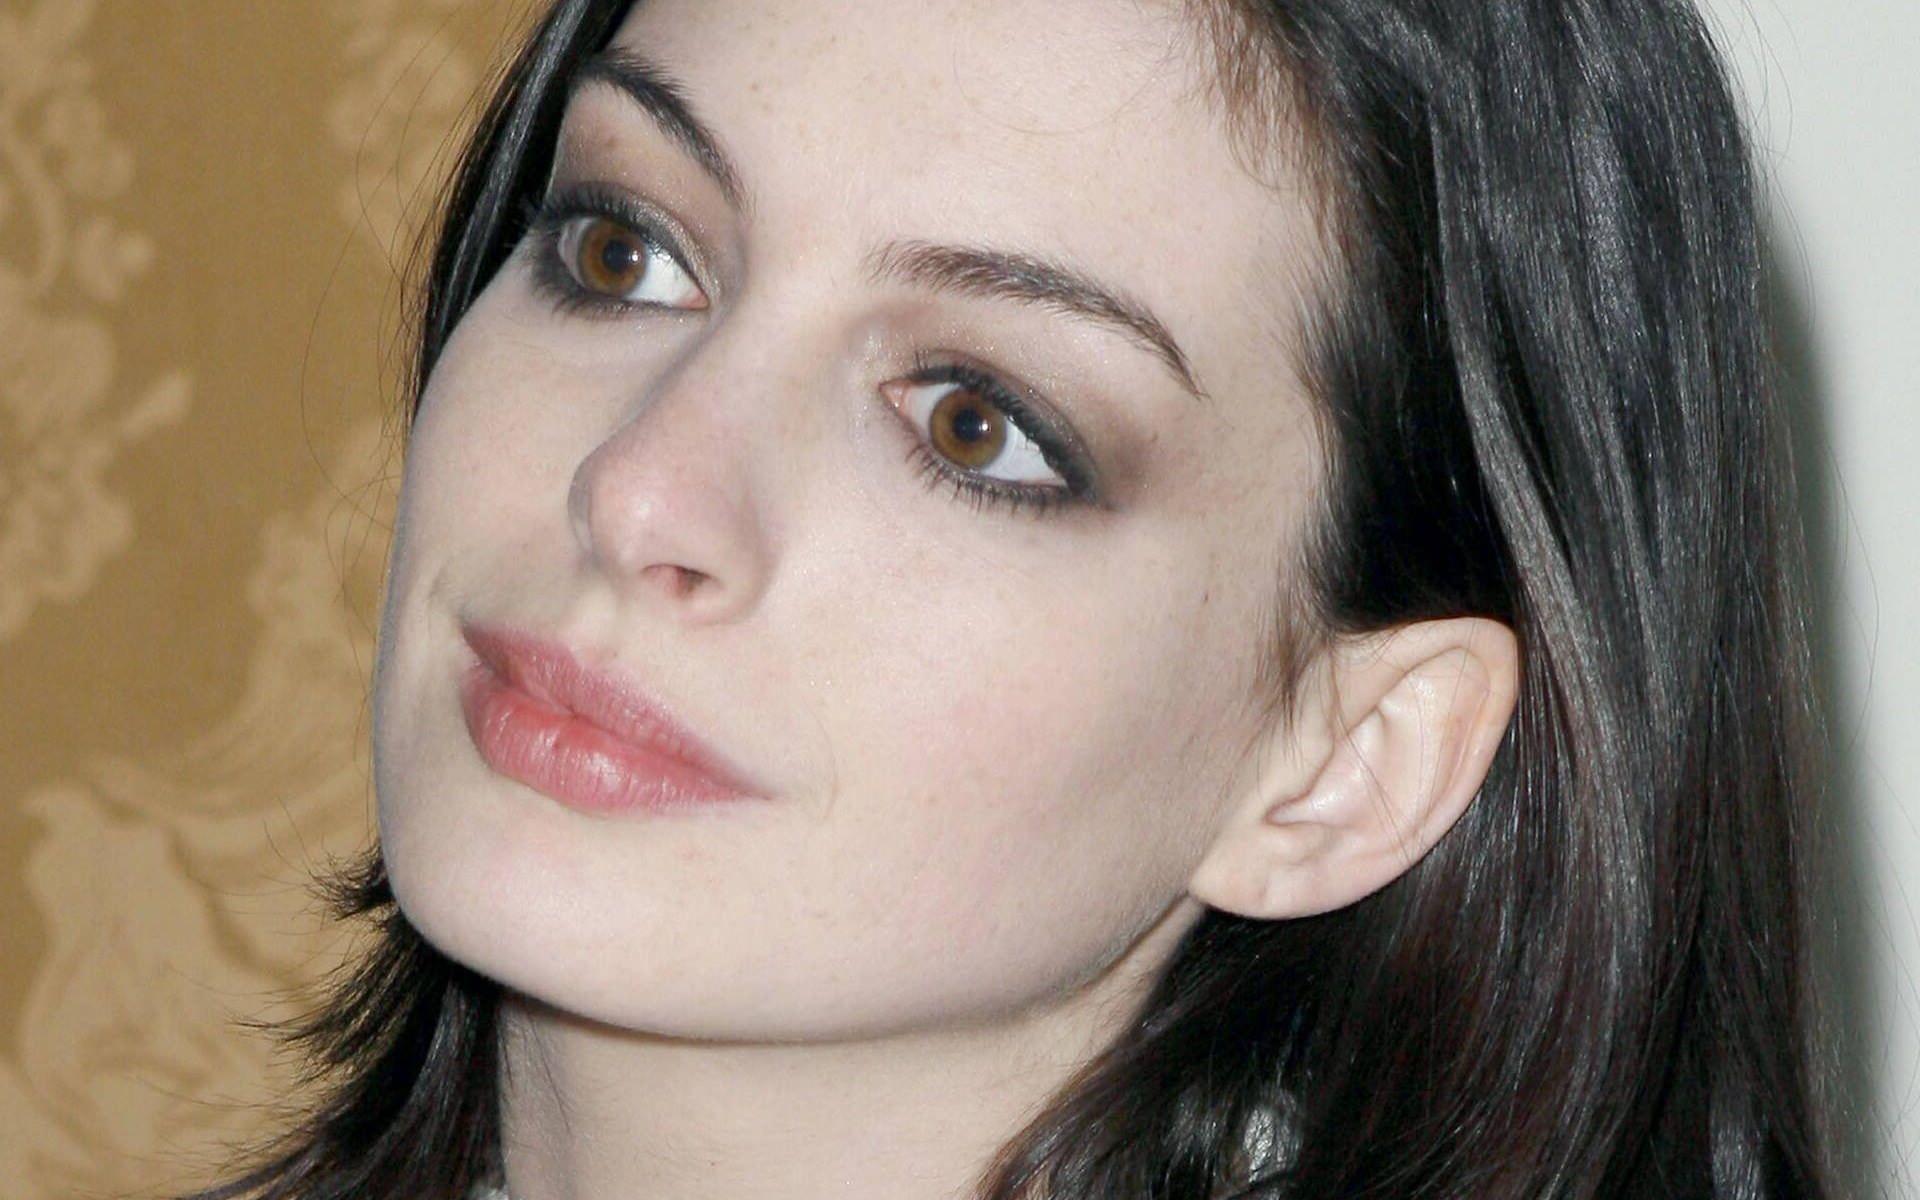 Anne Hathaway Image. Download Free Desktop Wallpaper Image